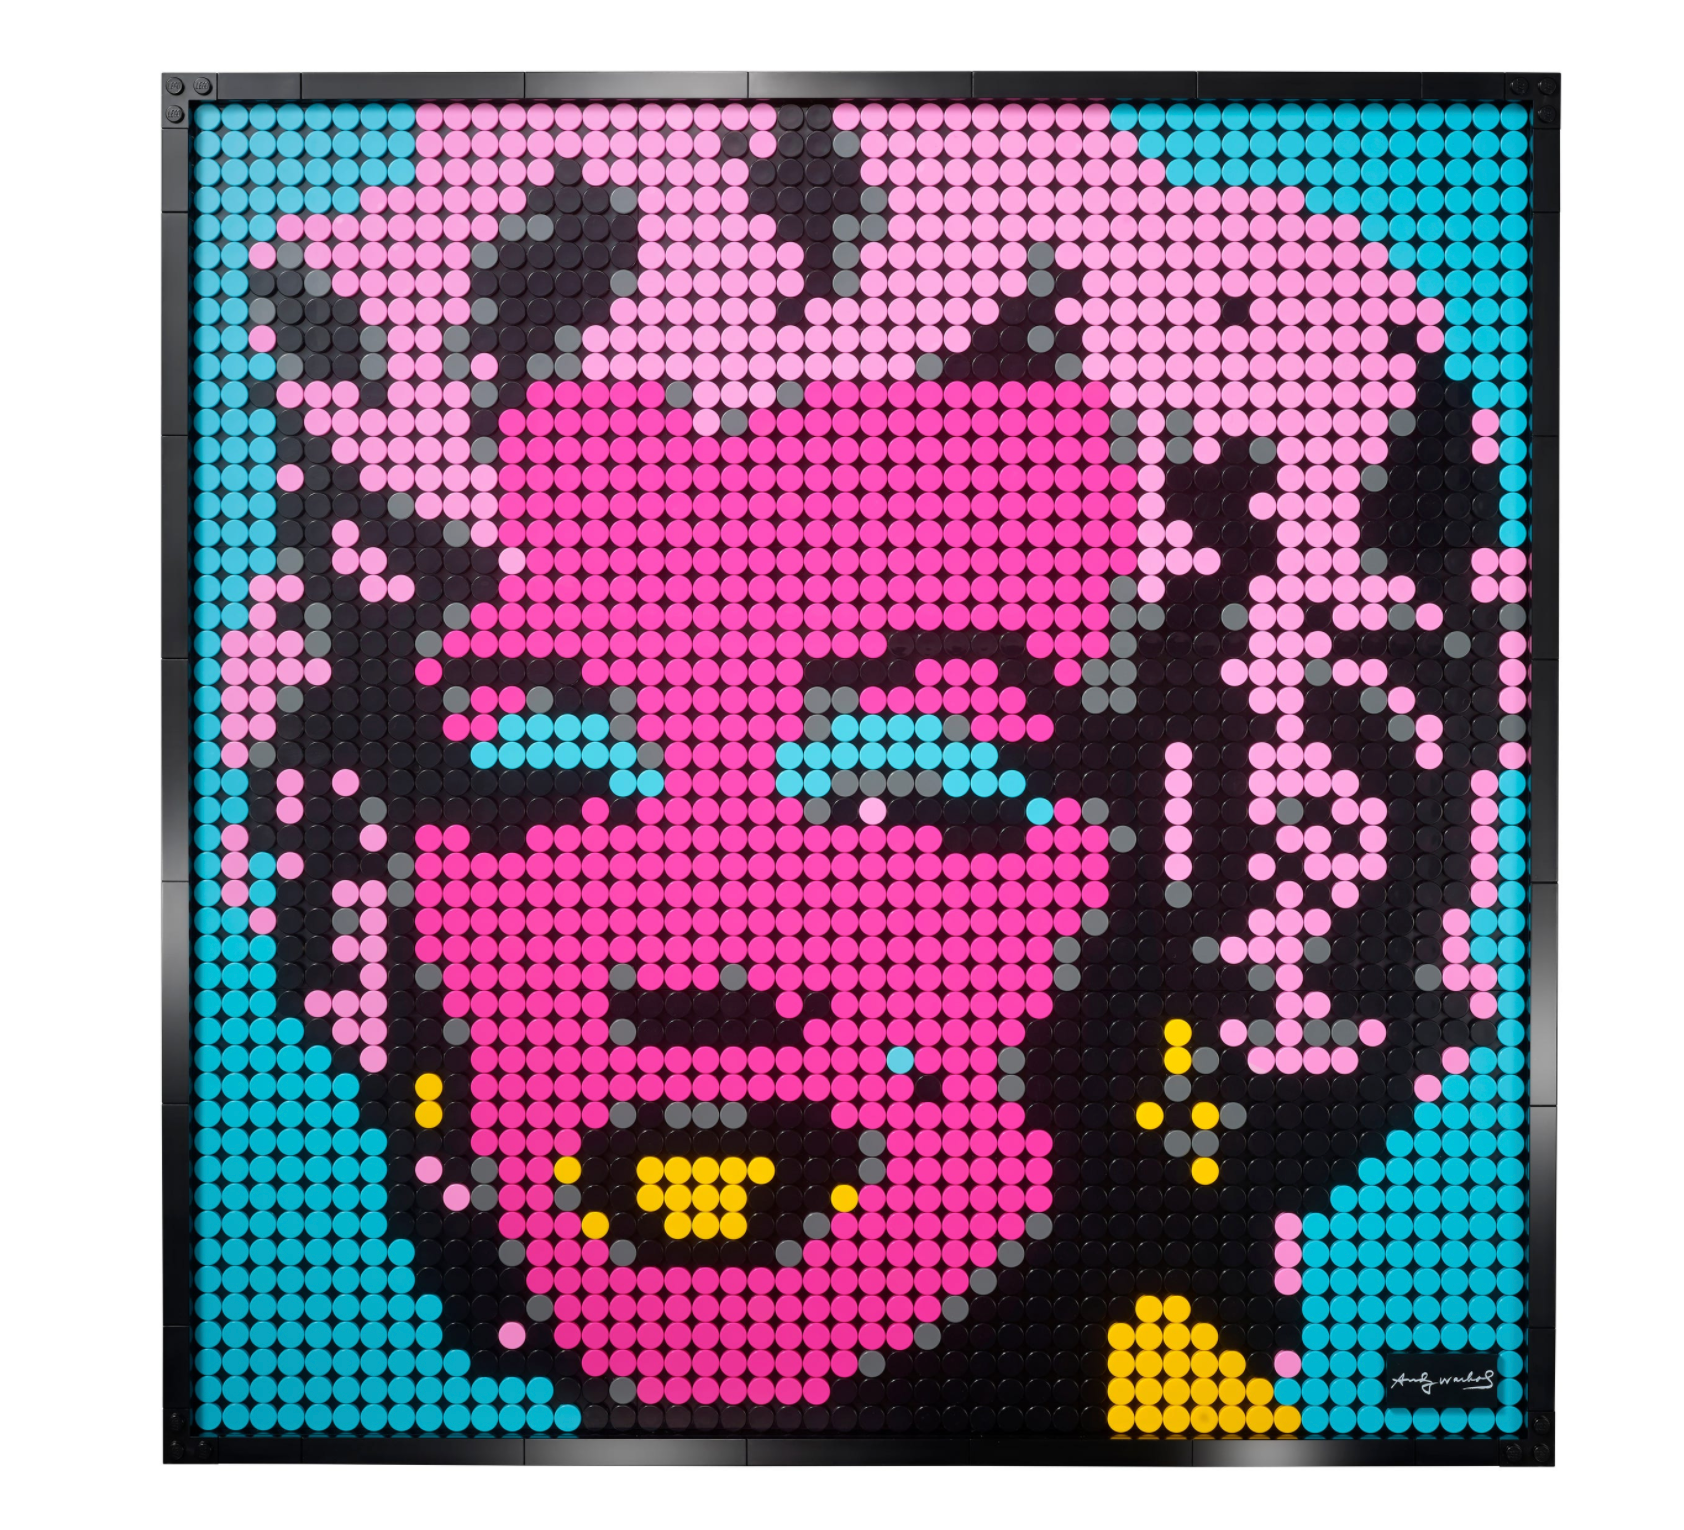 LEGO: ART - Andy Warhol's Marilyn Monroe